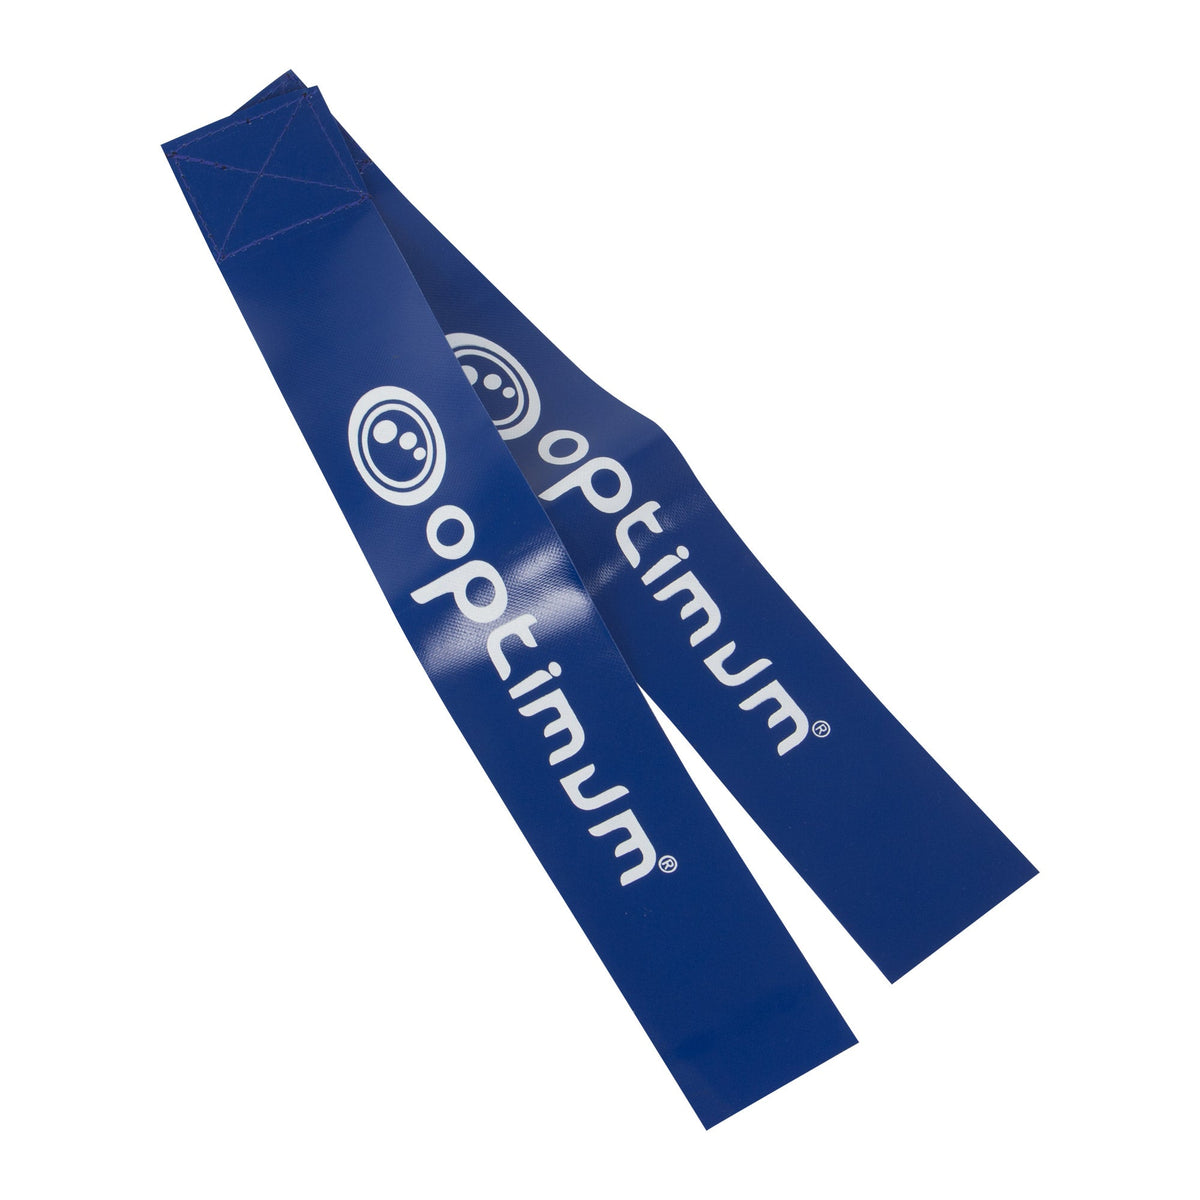 Blue Tackle Belt Flags - Optimum